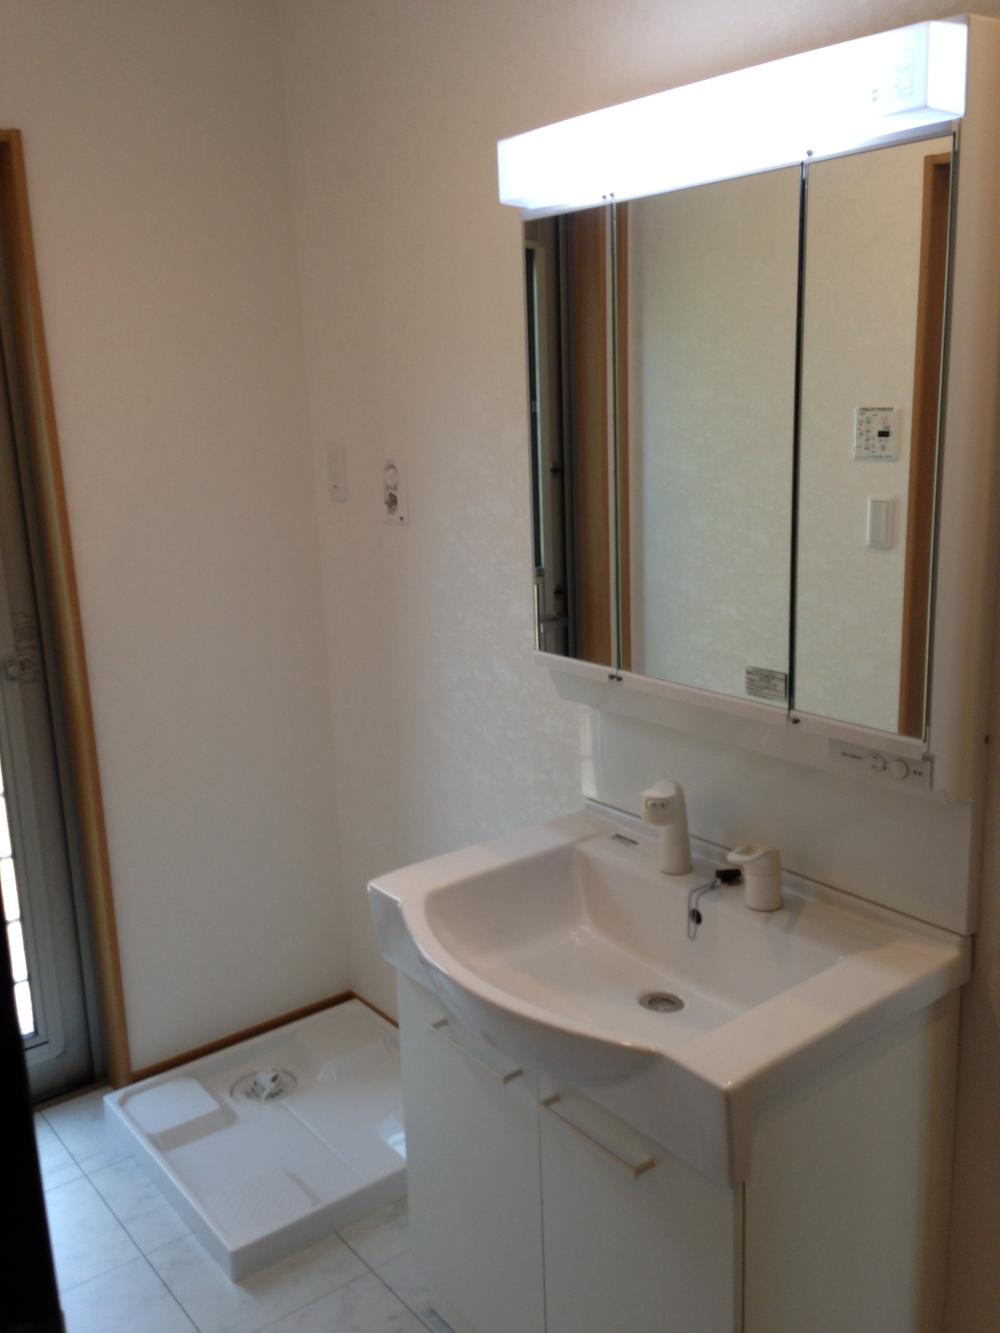 Wash basin, toilet. (3 Building) three-sided mirror type of shampoo dresser